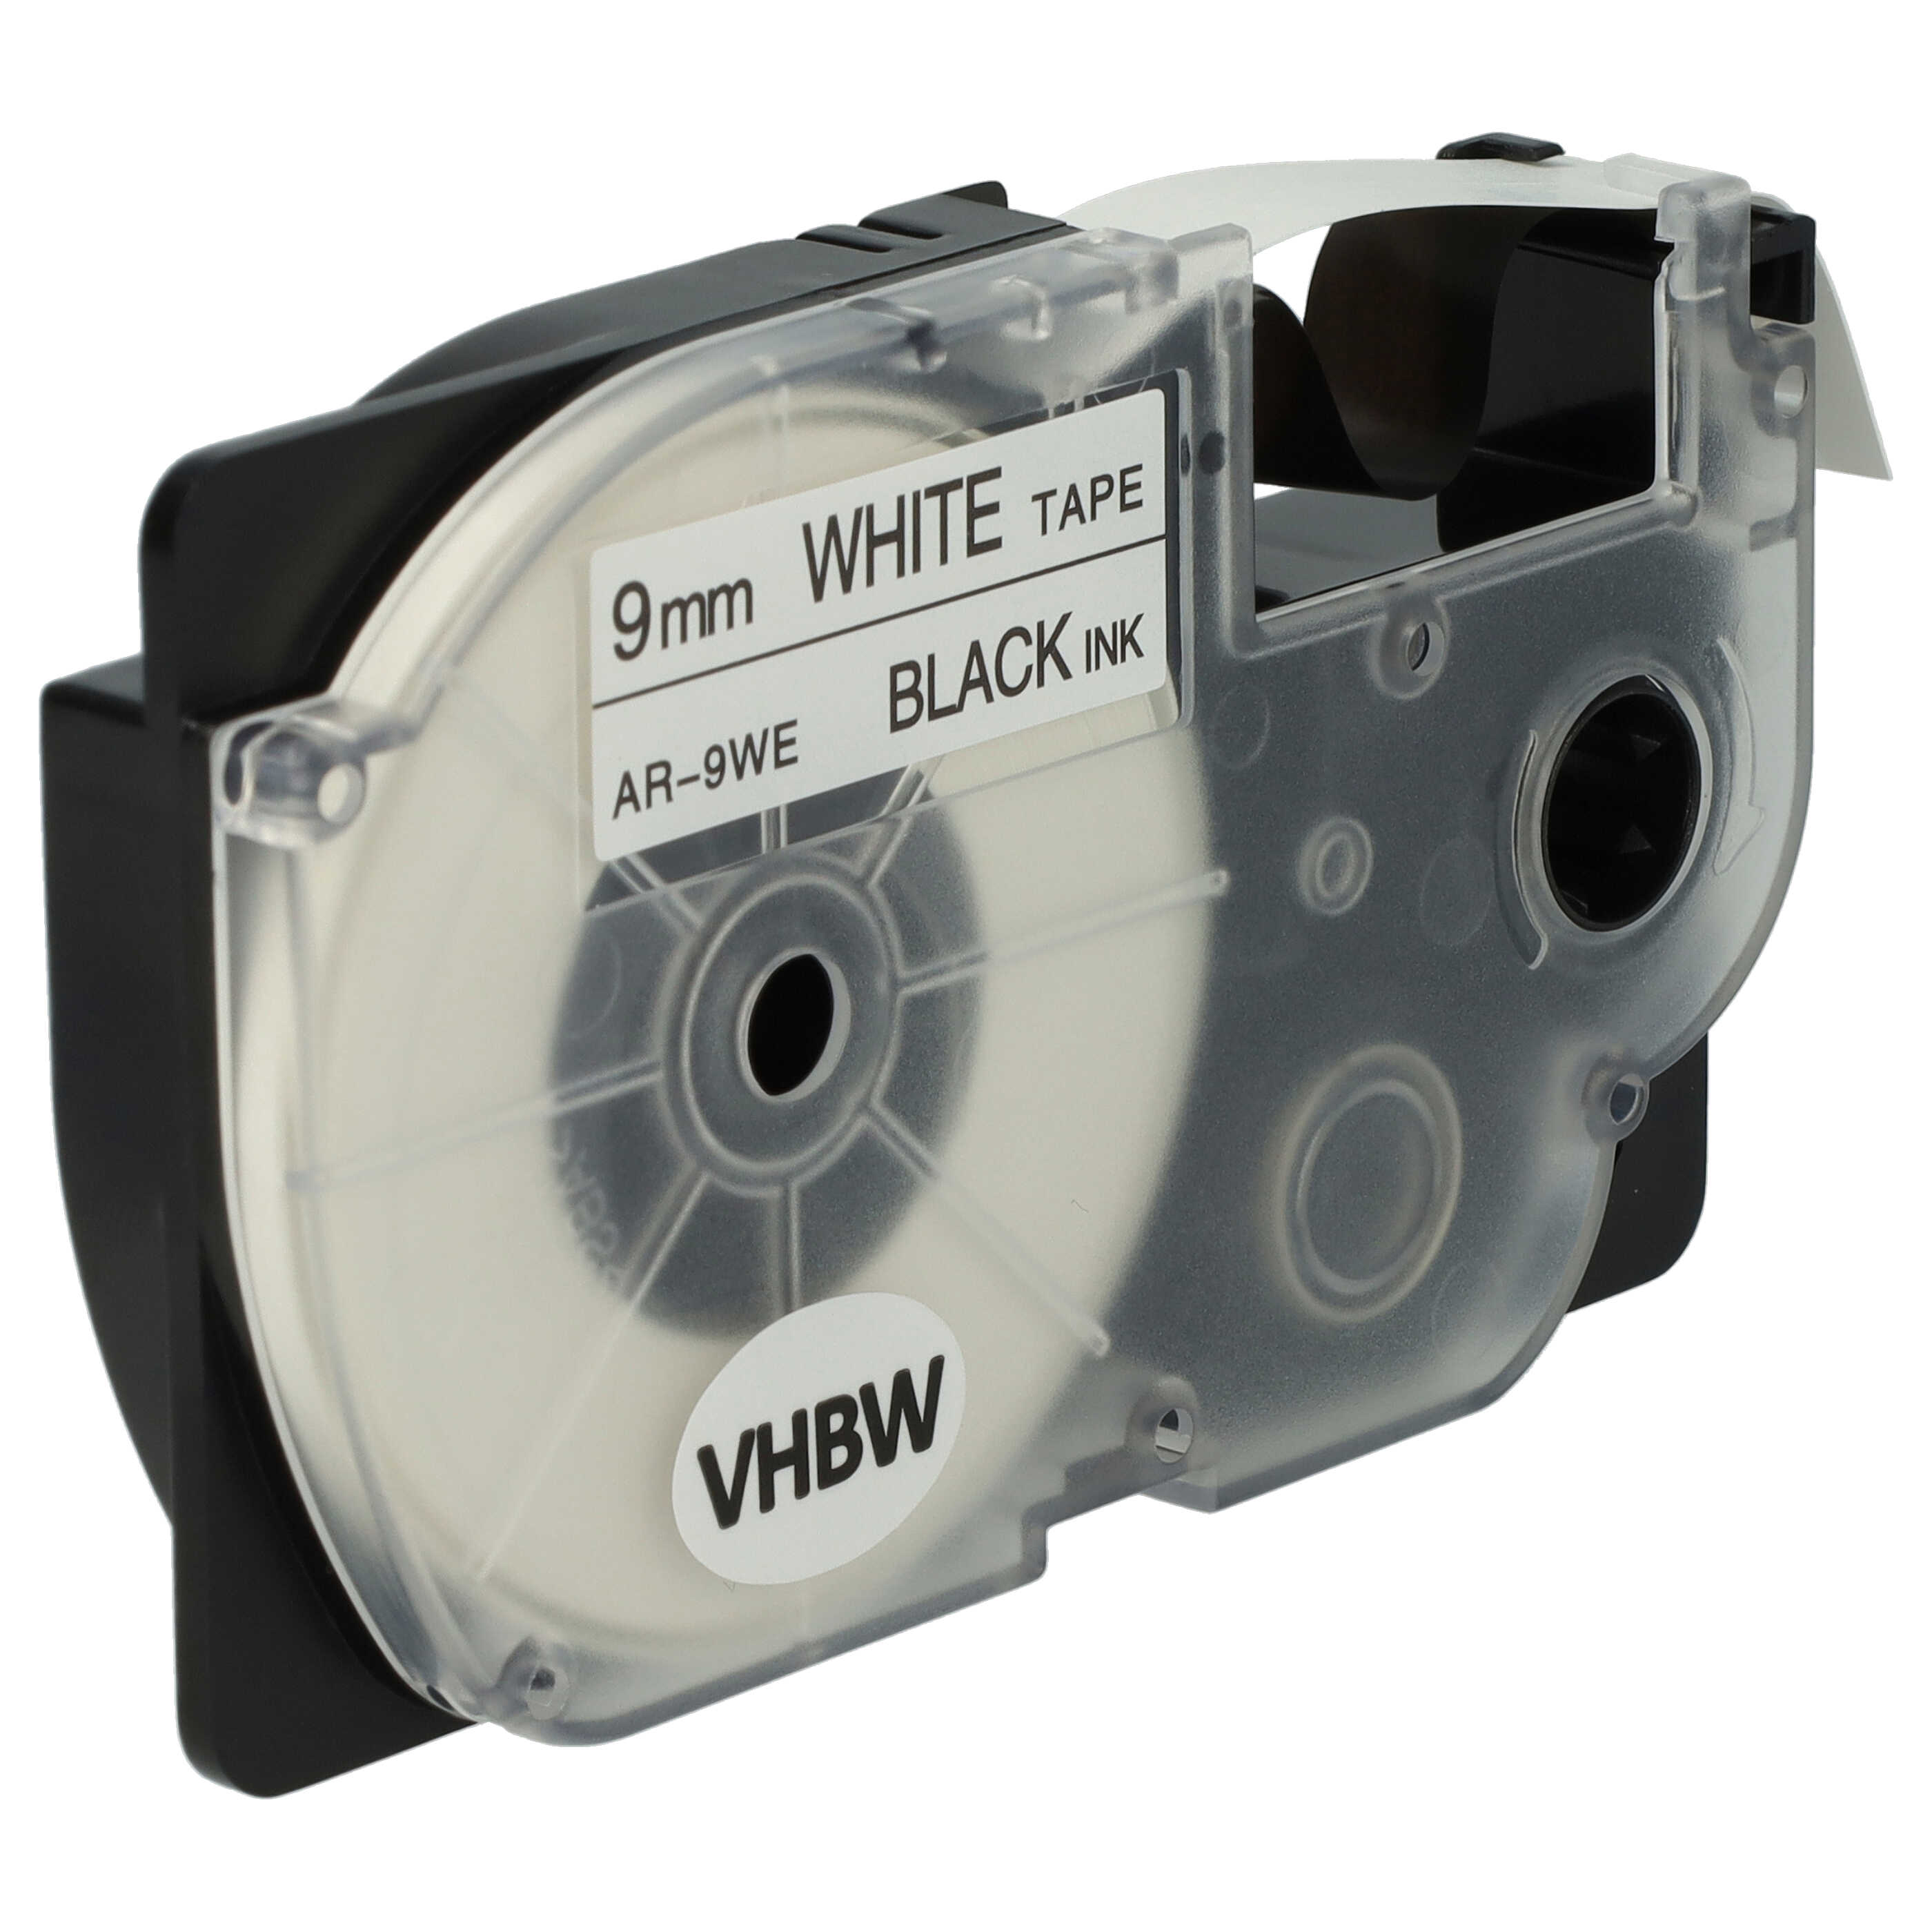 2x Cassetta nastro sostituisce Casio XR-9WE1 per etichettatrice Casio 9mm nero su bianco